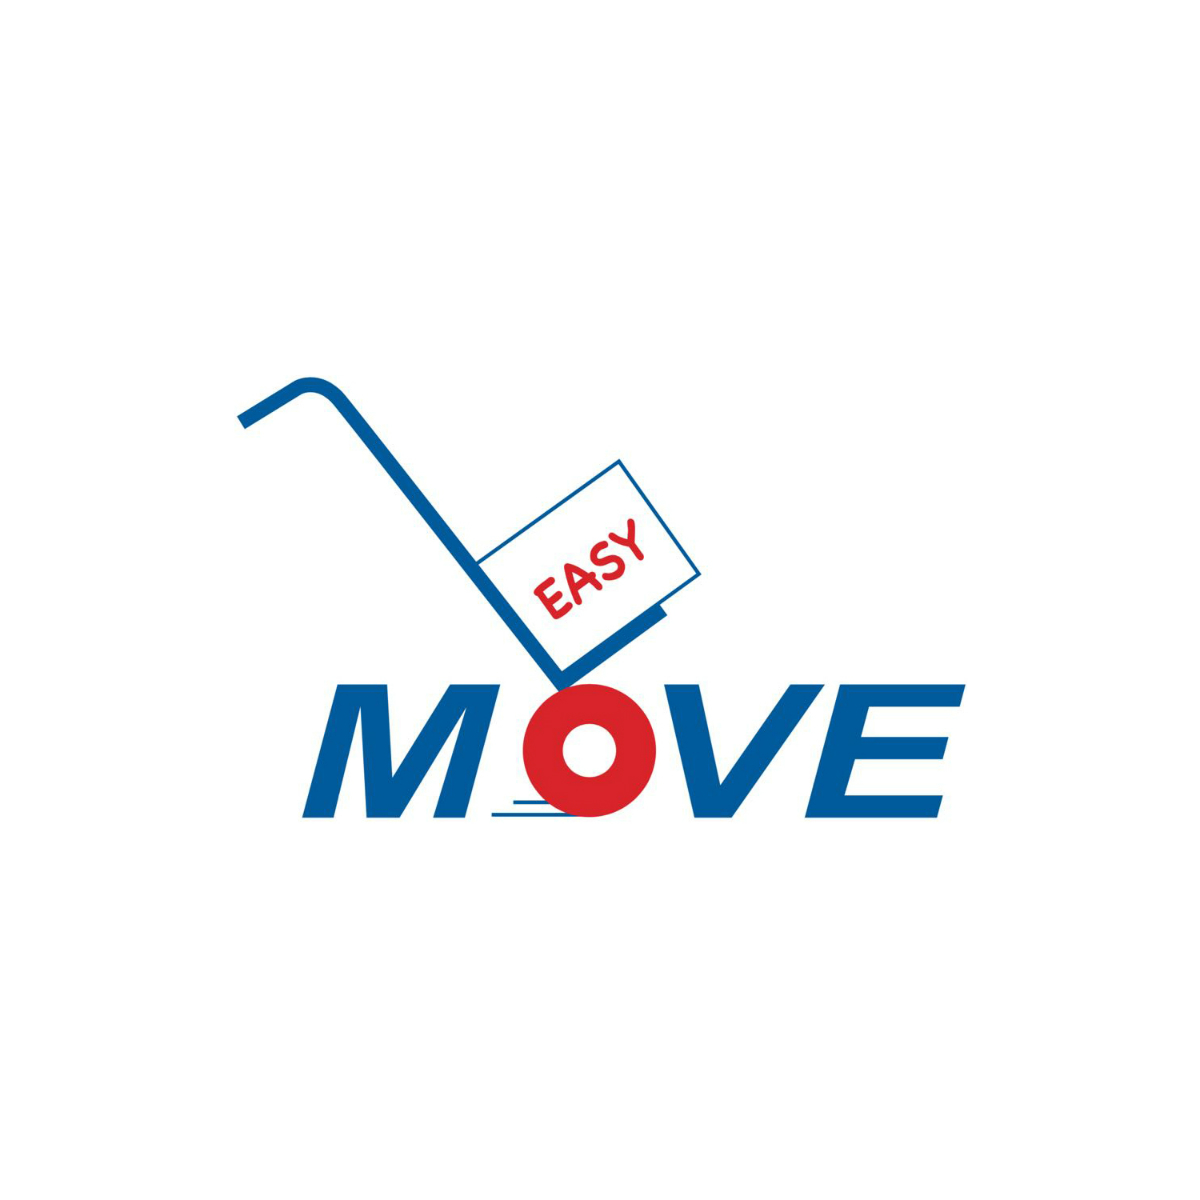 Easy Move movers kuwait 1200x1200 JPEG